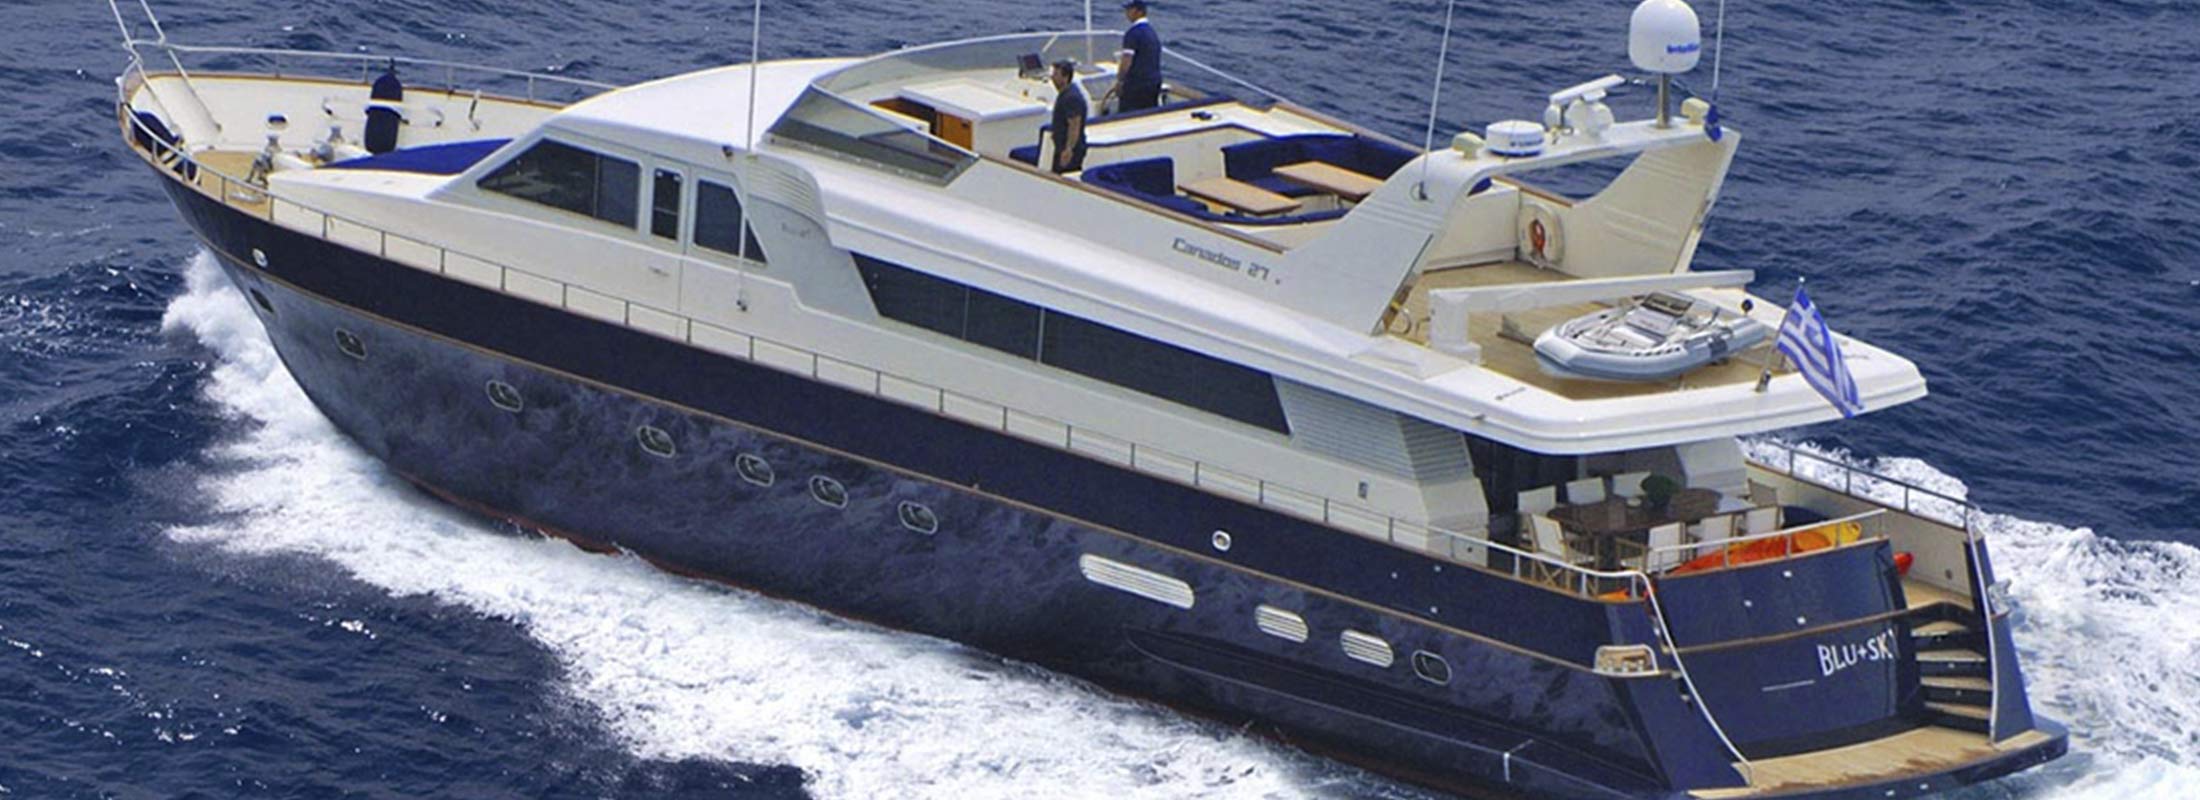 Blu Sky Motor Yacht for Charter Mediterranean slider 1